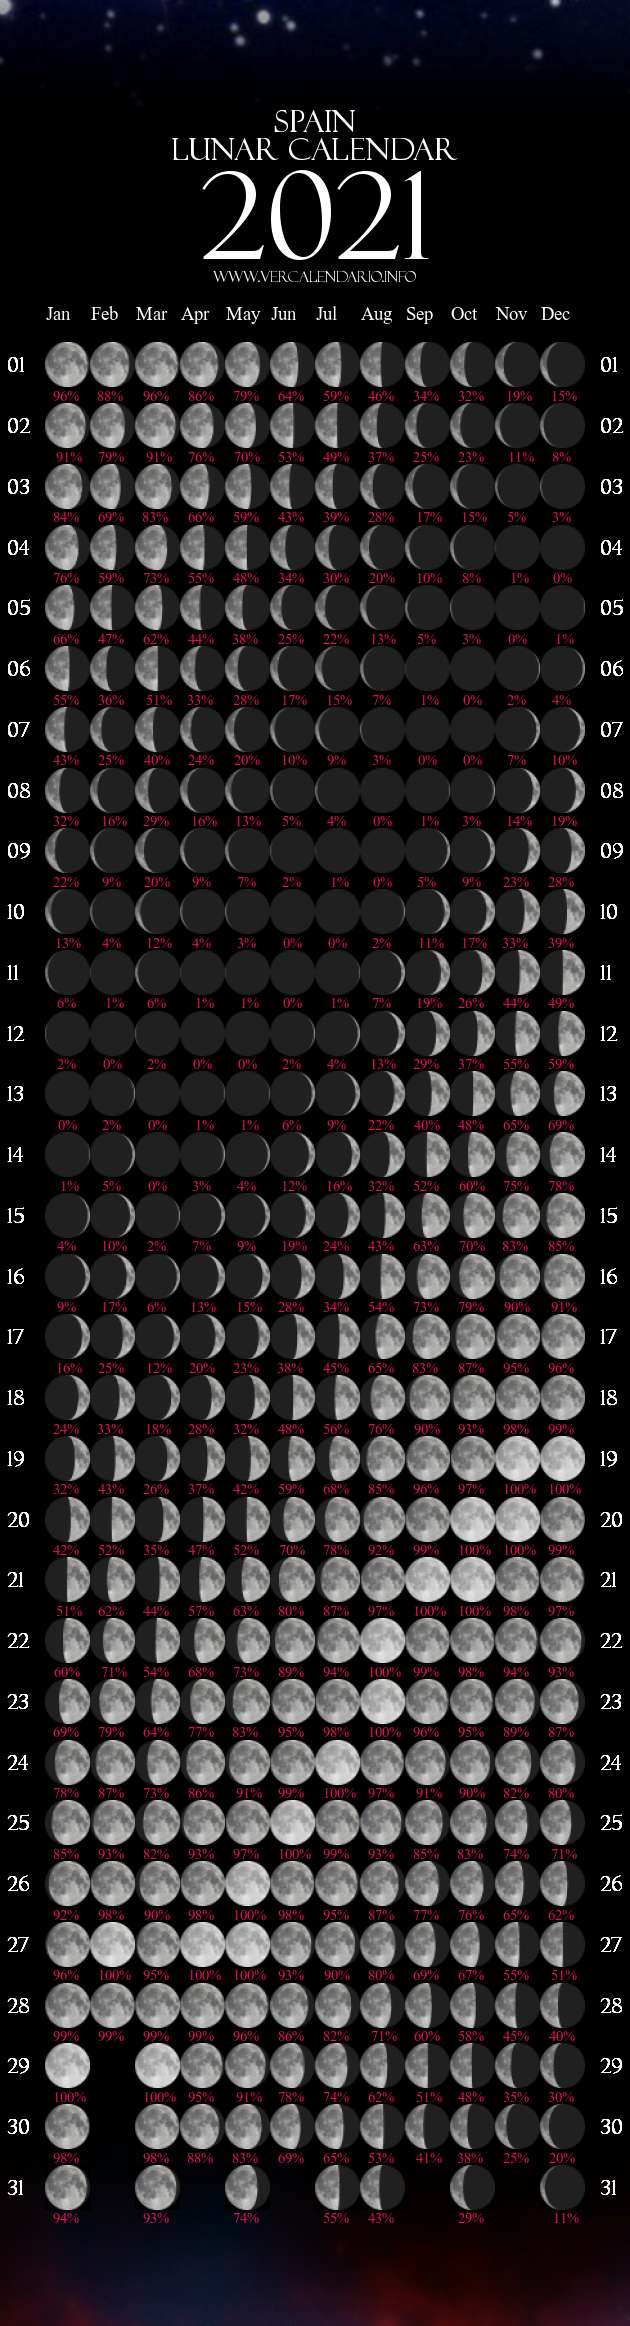 Lunar Calendar 2021 (Spain)